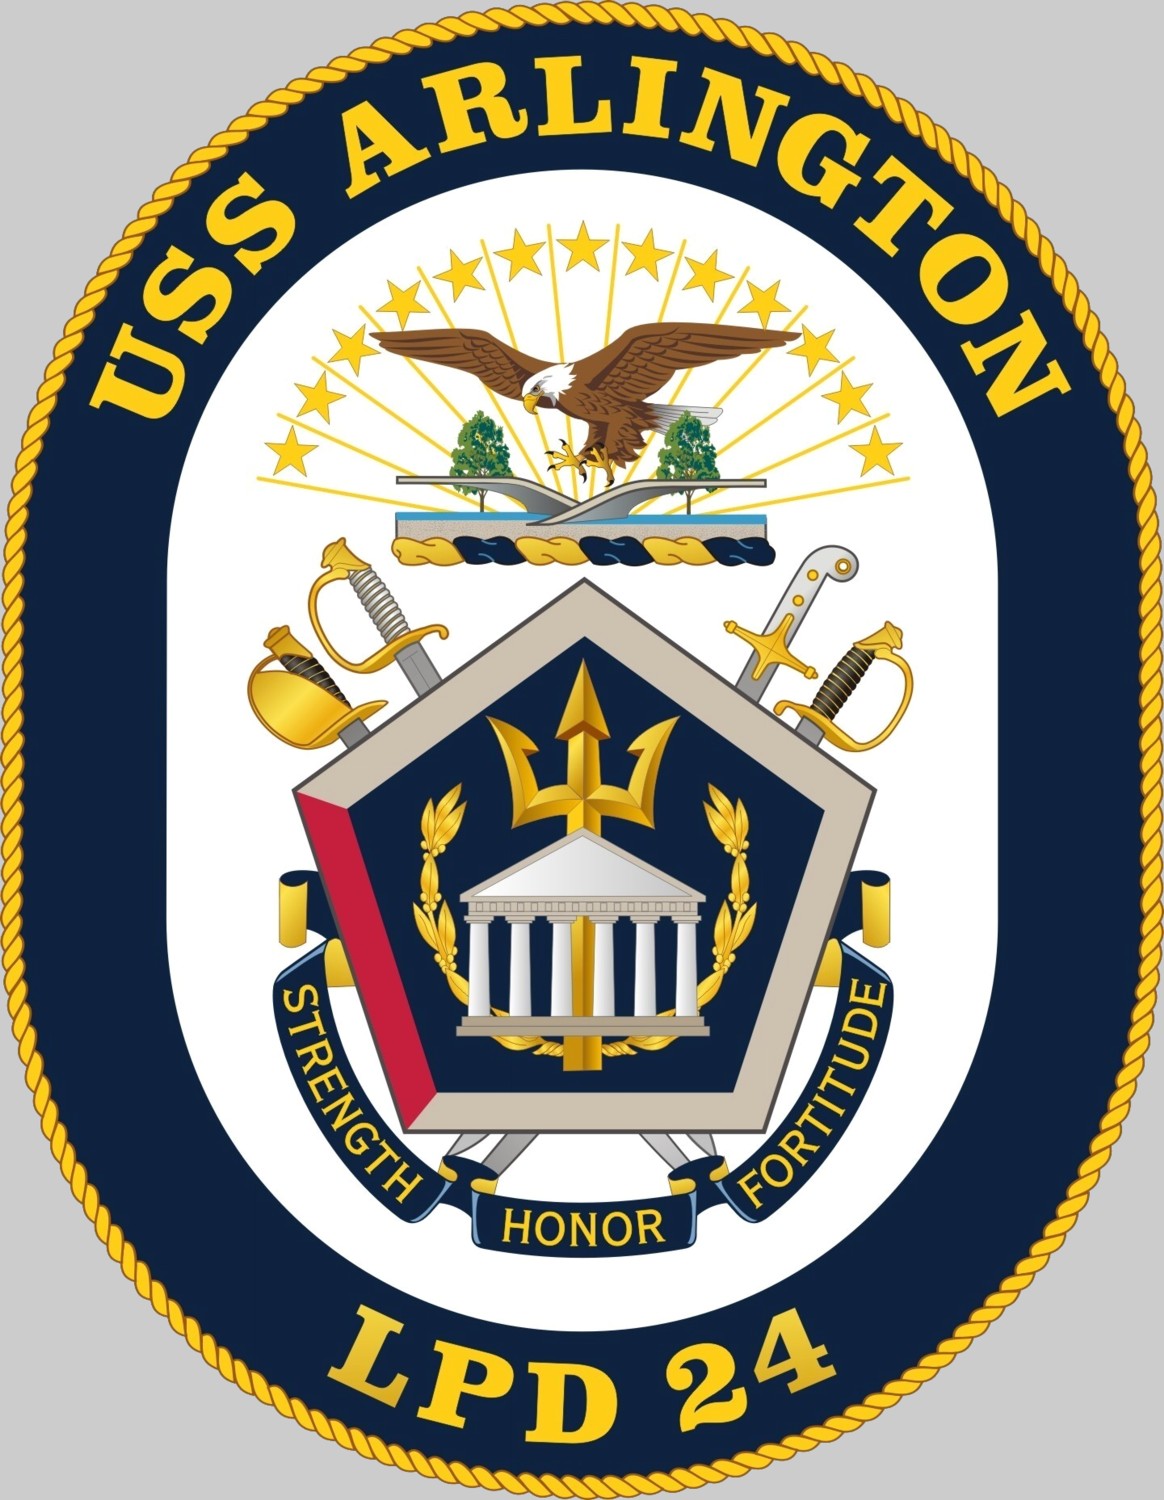 lpd-24 uss arlington insignia patch crest badge san antonio class amphibious transport dock ship navy 02c